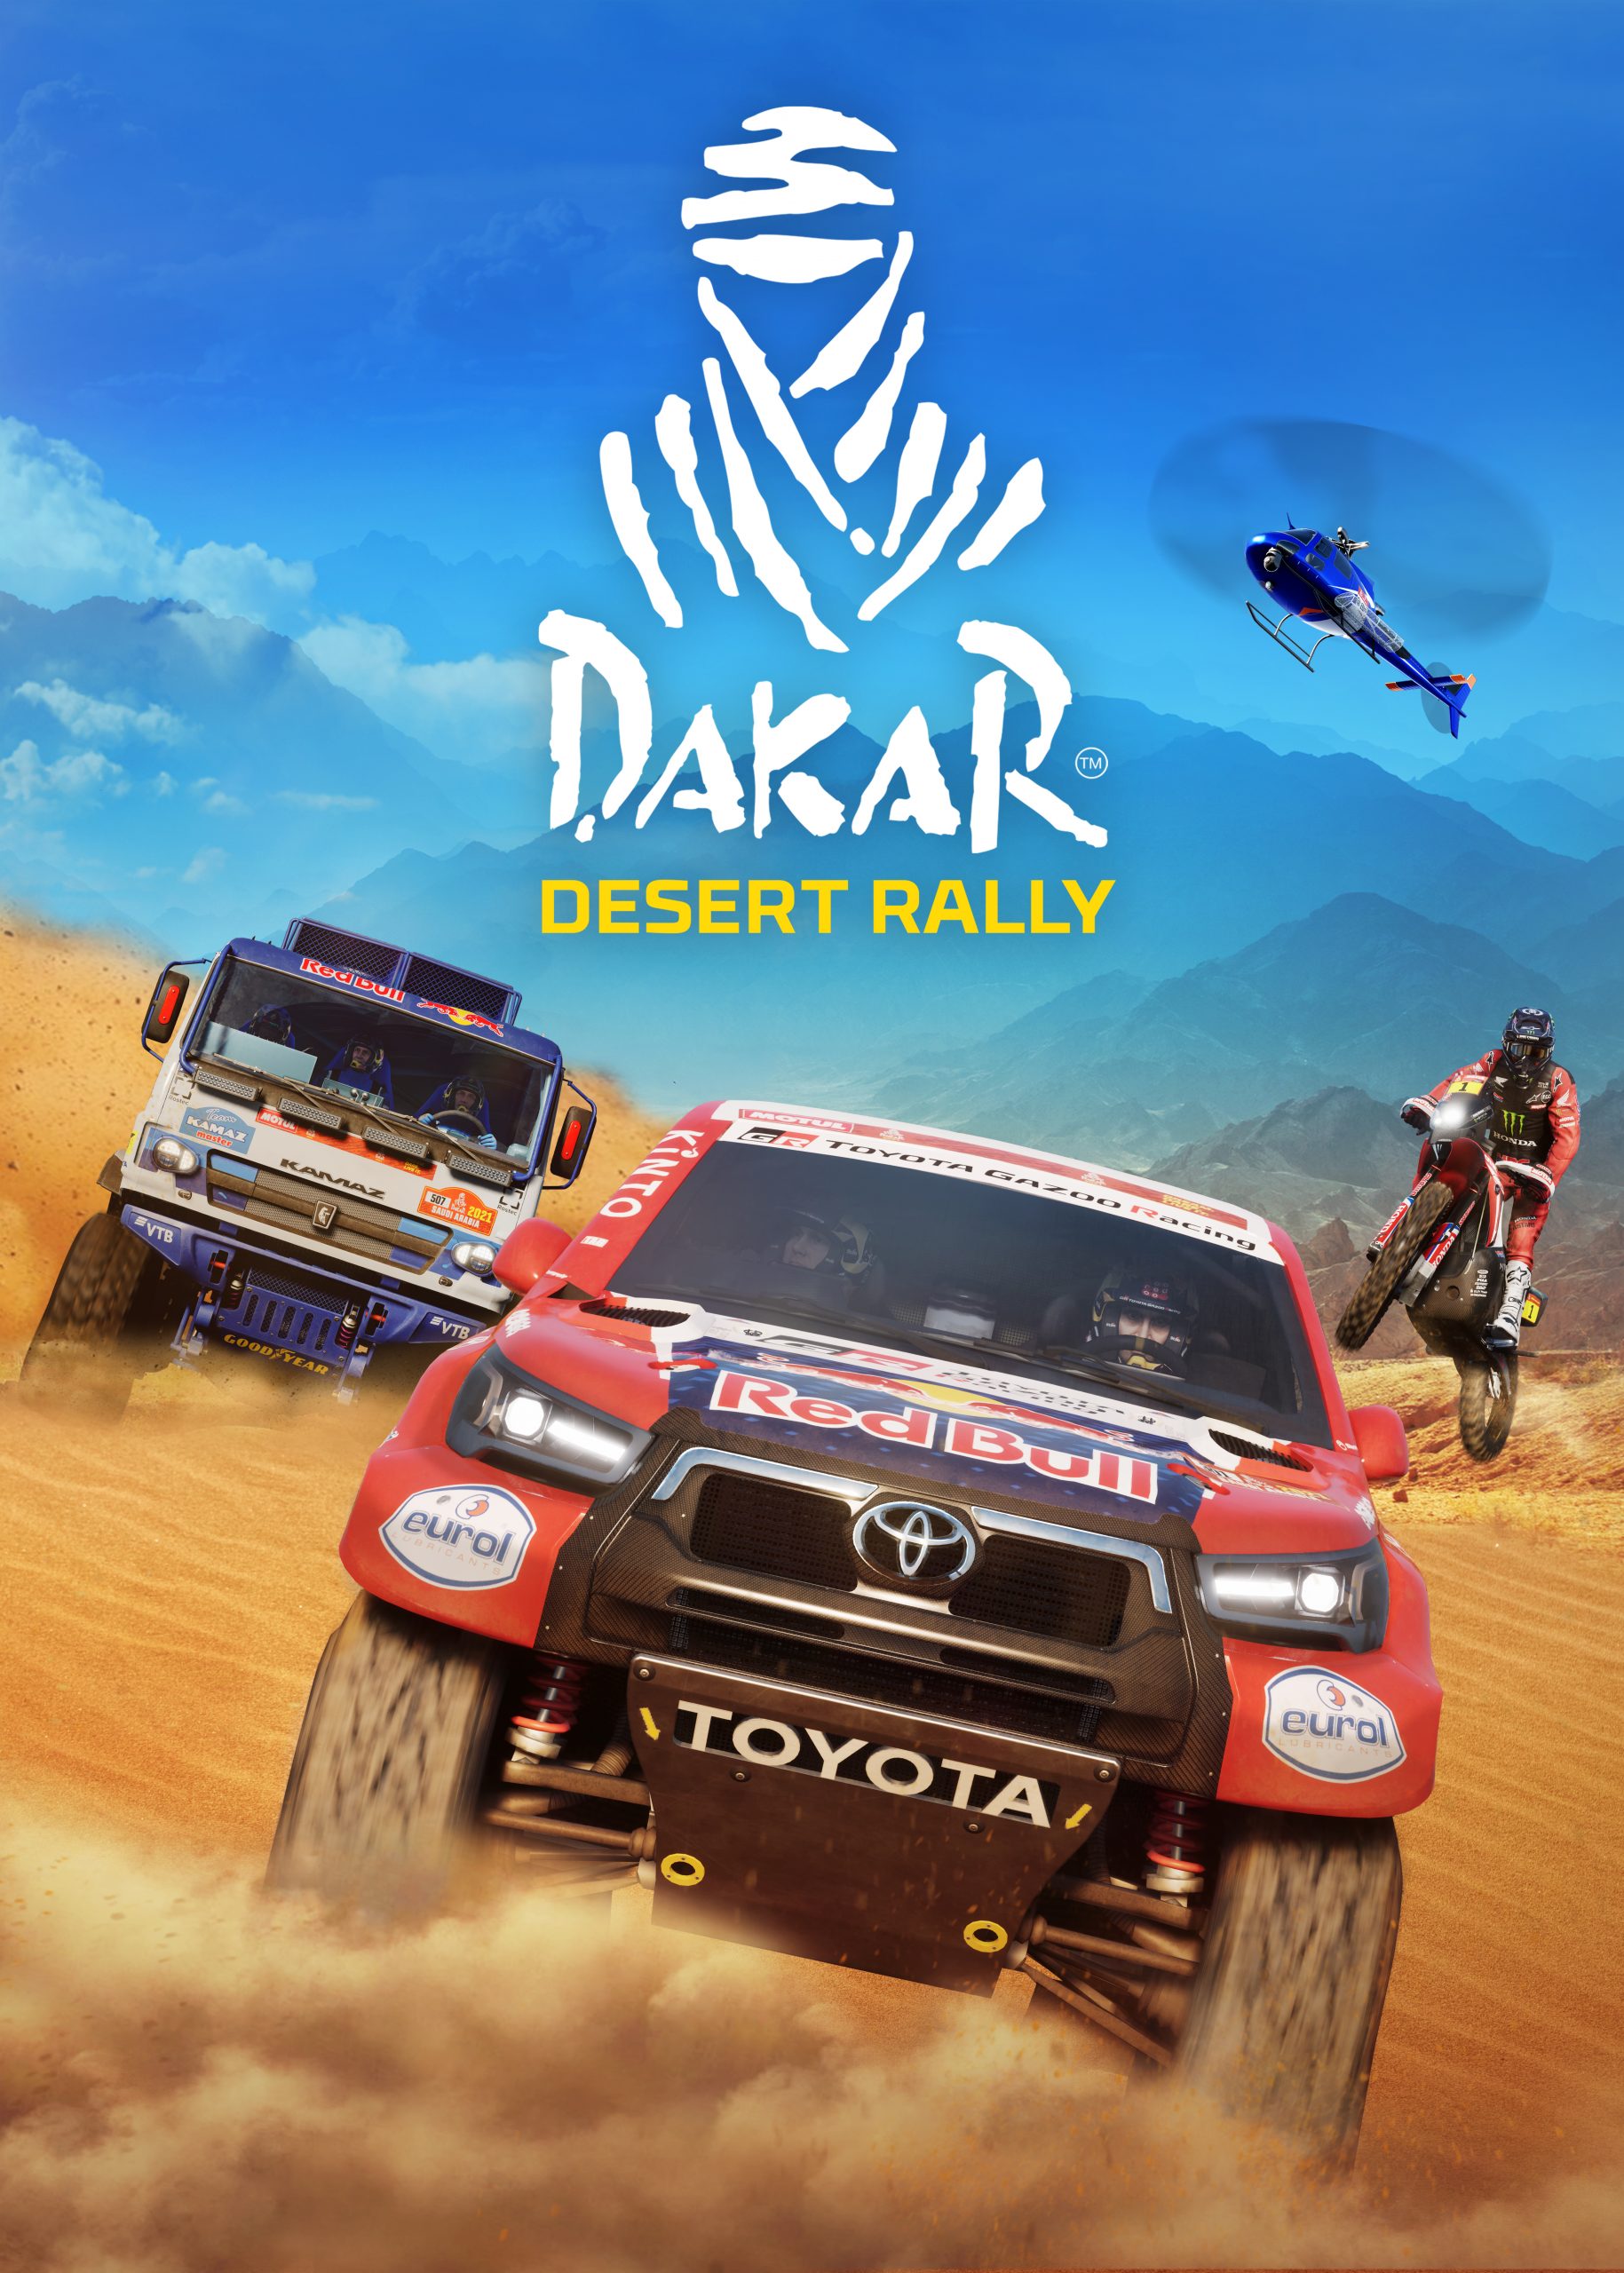 Jeux PlayStation 5 Call of Duty - Smartphones à Dakar, Electroménager à  Dakar, Informatique à Dakar et jeux-vidéos à Dakar, Iphone à Dakar